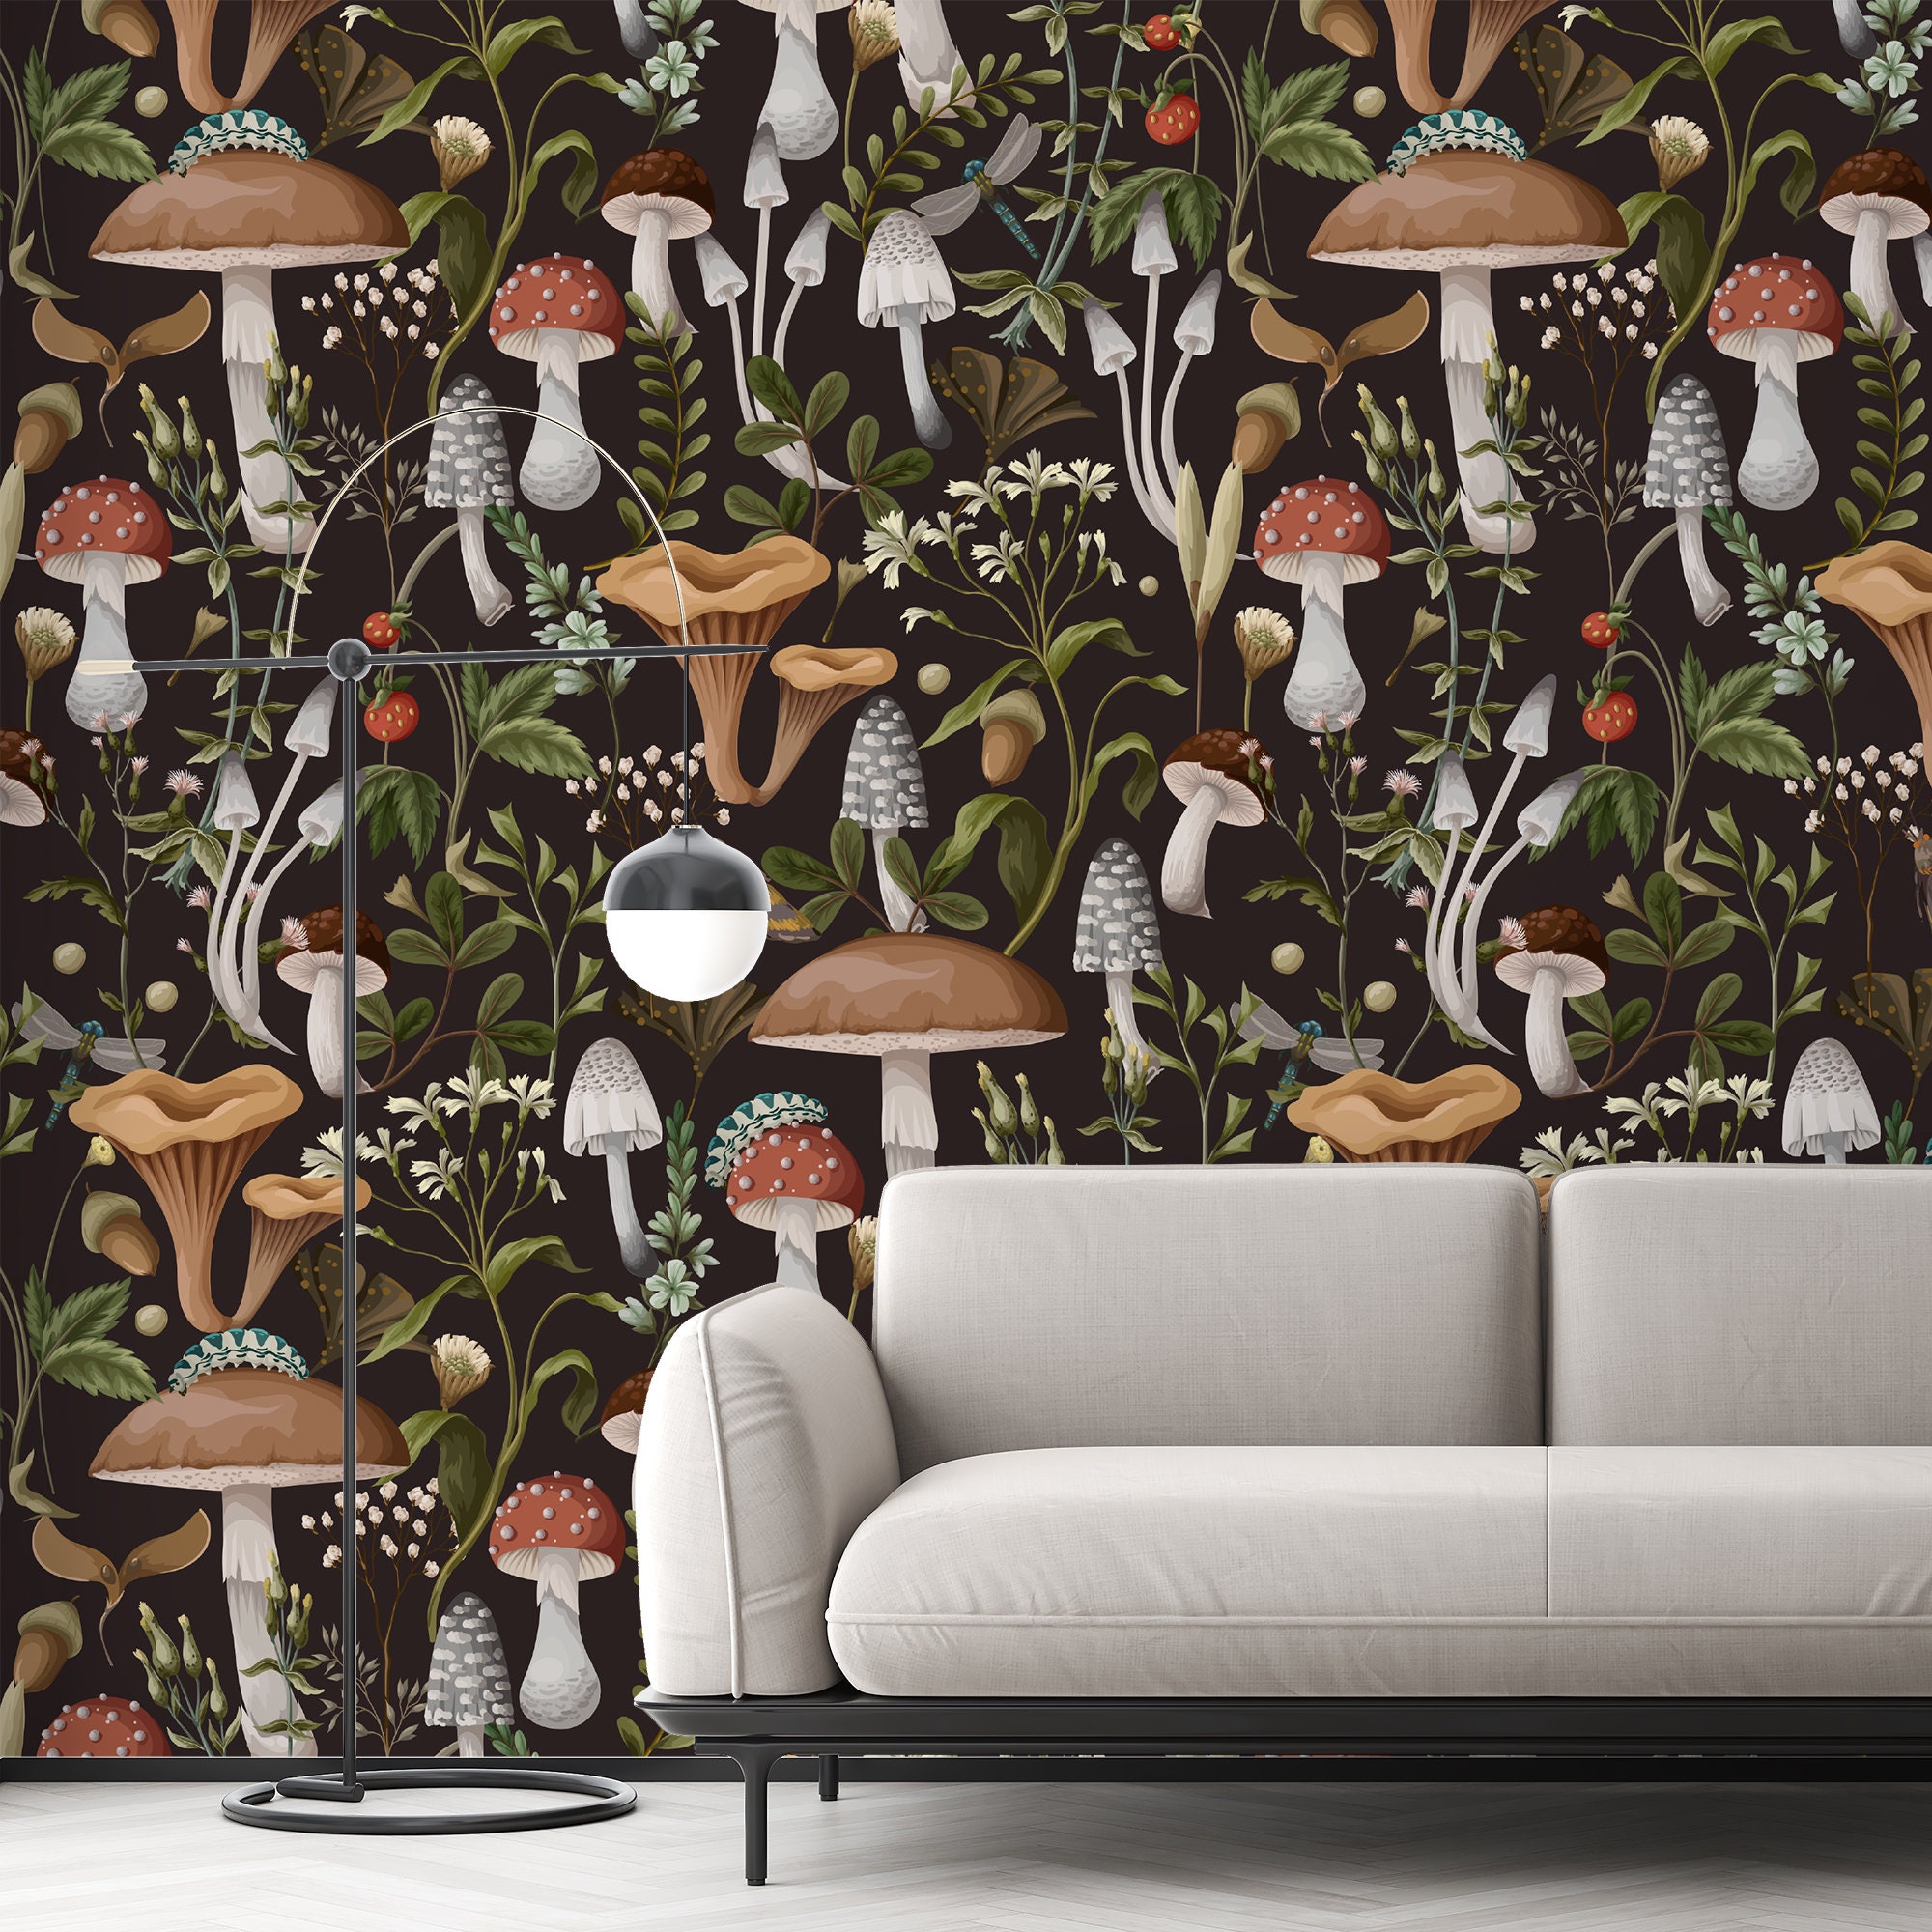 Autumn Mushroom Printed Peel and Stick Decoration WallpaperRemovable  Wallpaper  eBay